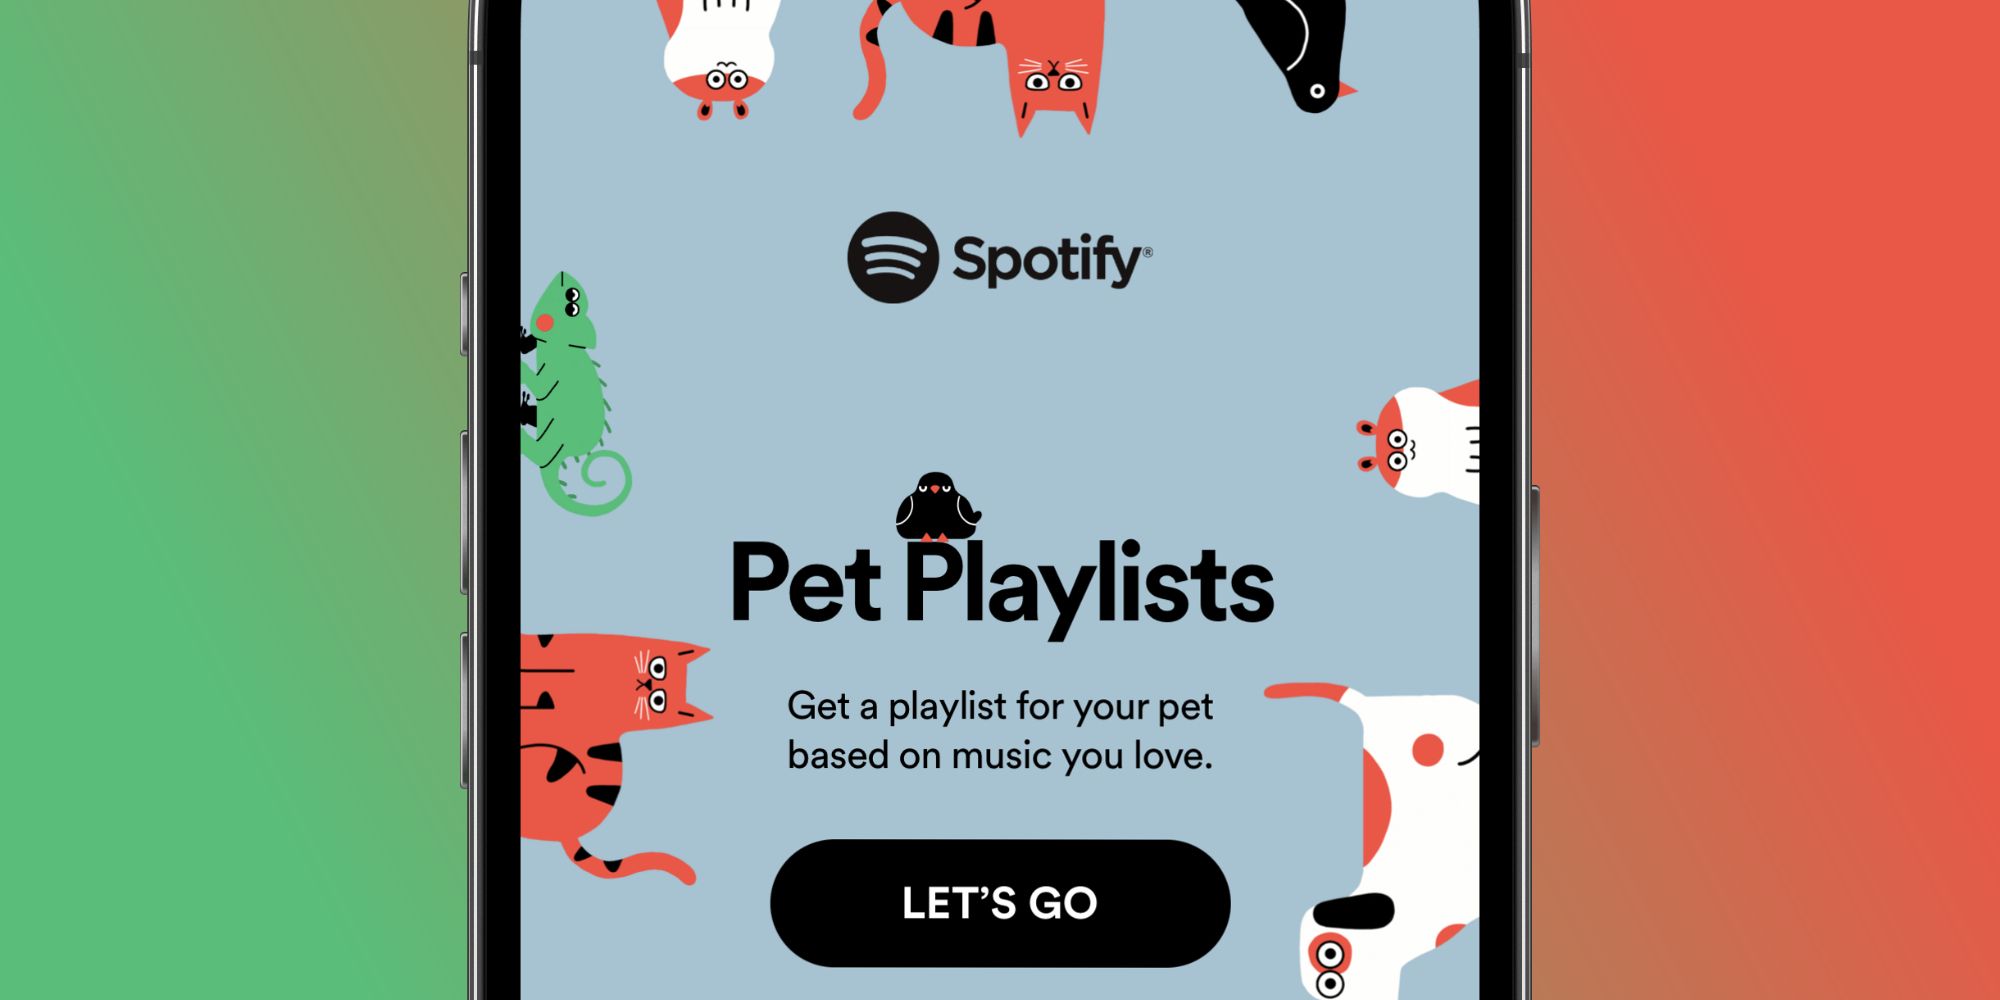 Spotify's Pet Playlists feature